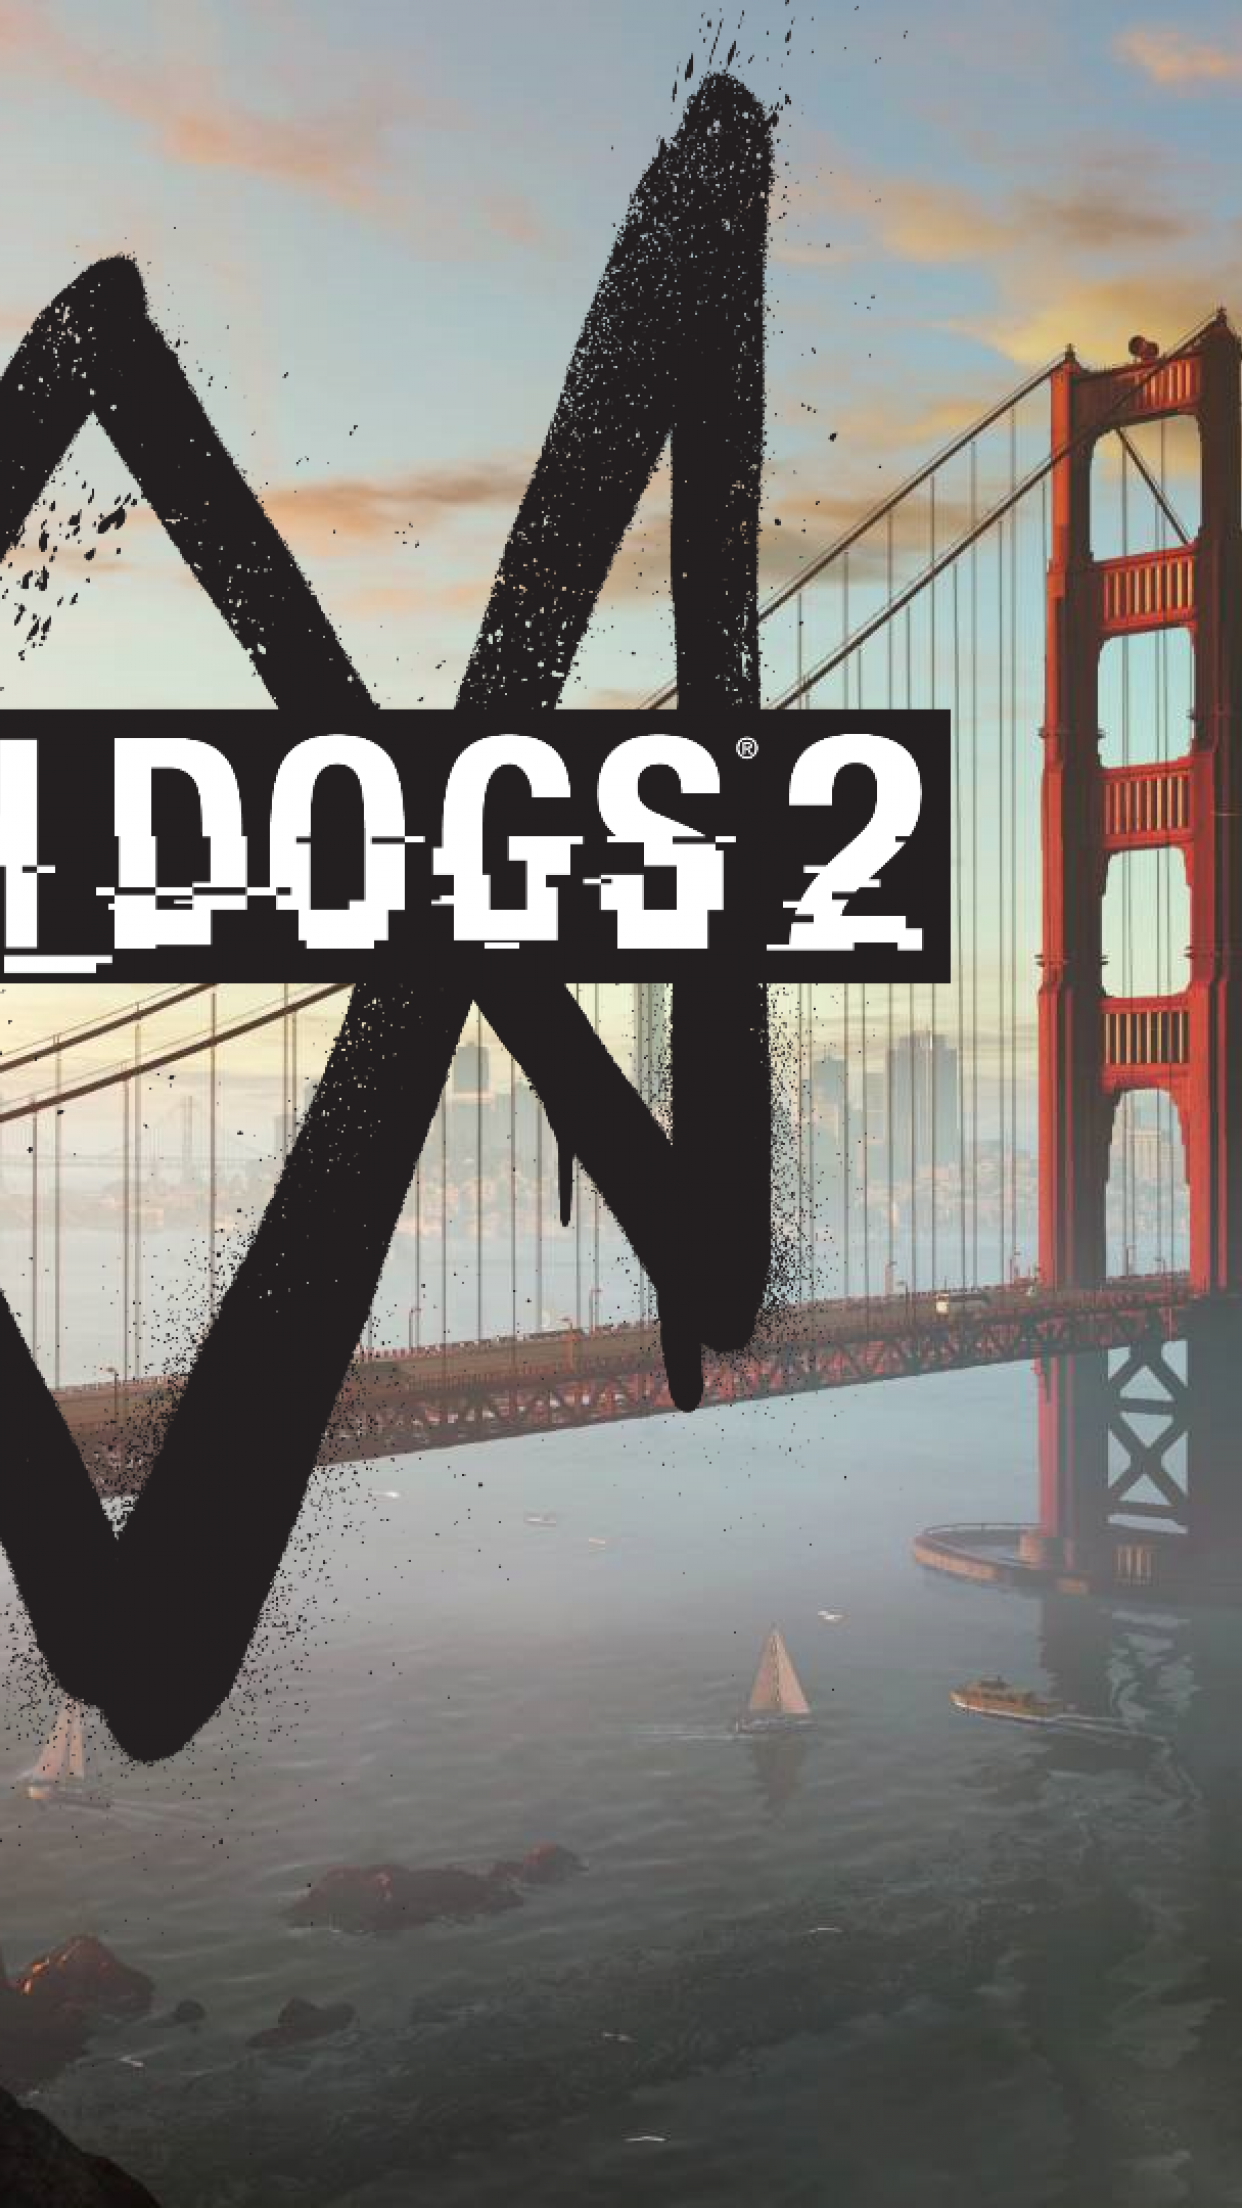 Watch Dogs 2 Game Desktop Wallpaper Games - Desktop Wallpaper Hd Watch Dogs 2 , HD Wallpaper & Backgrounds